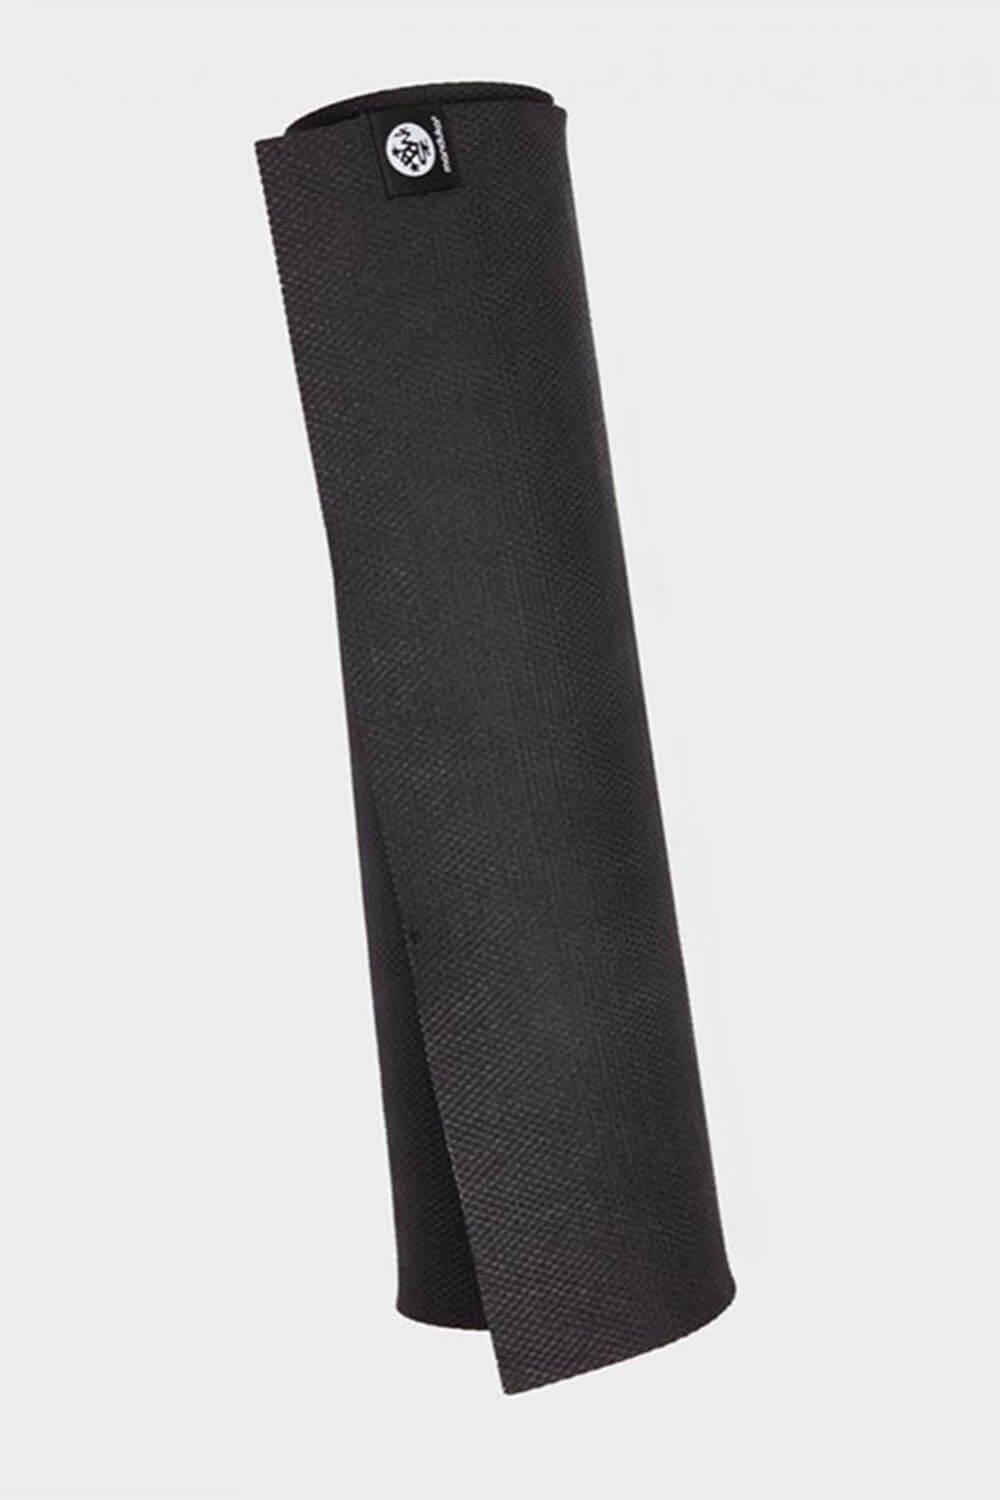 X Yoga Mat 5mm